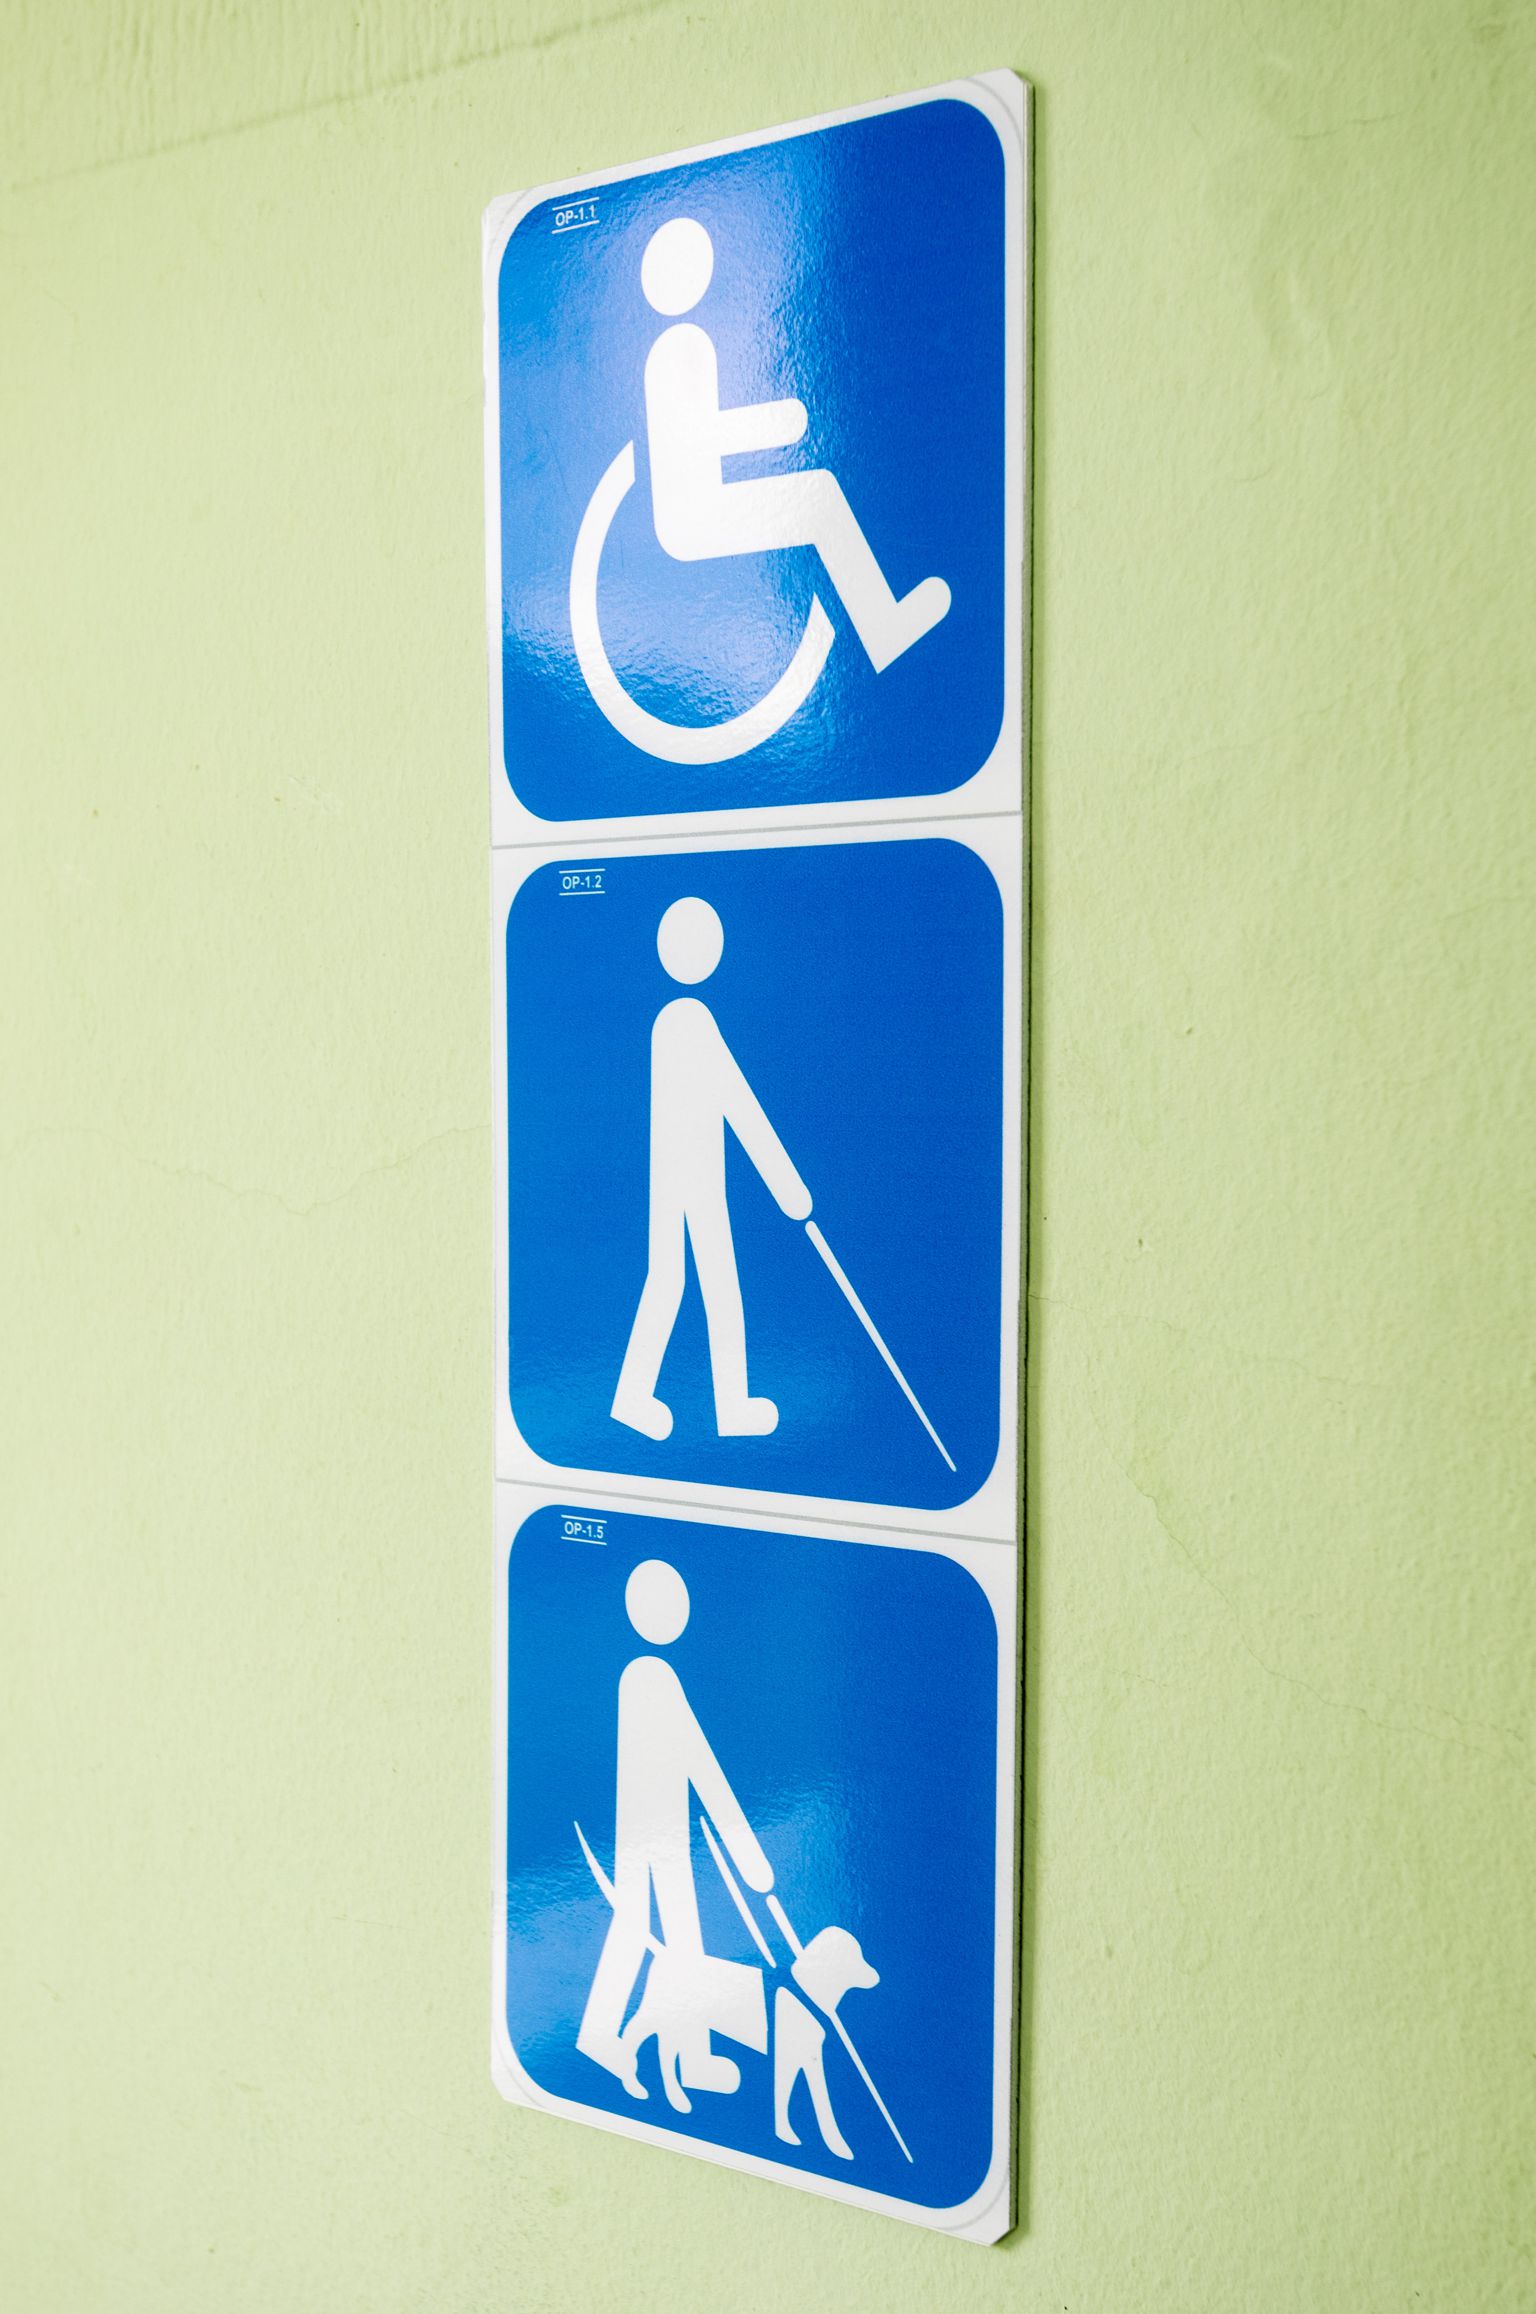 Accessibility signs unutrasnja 15x15